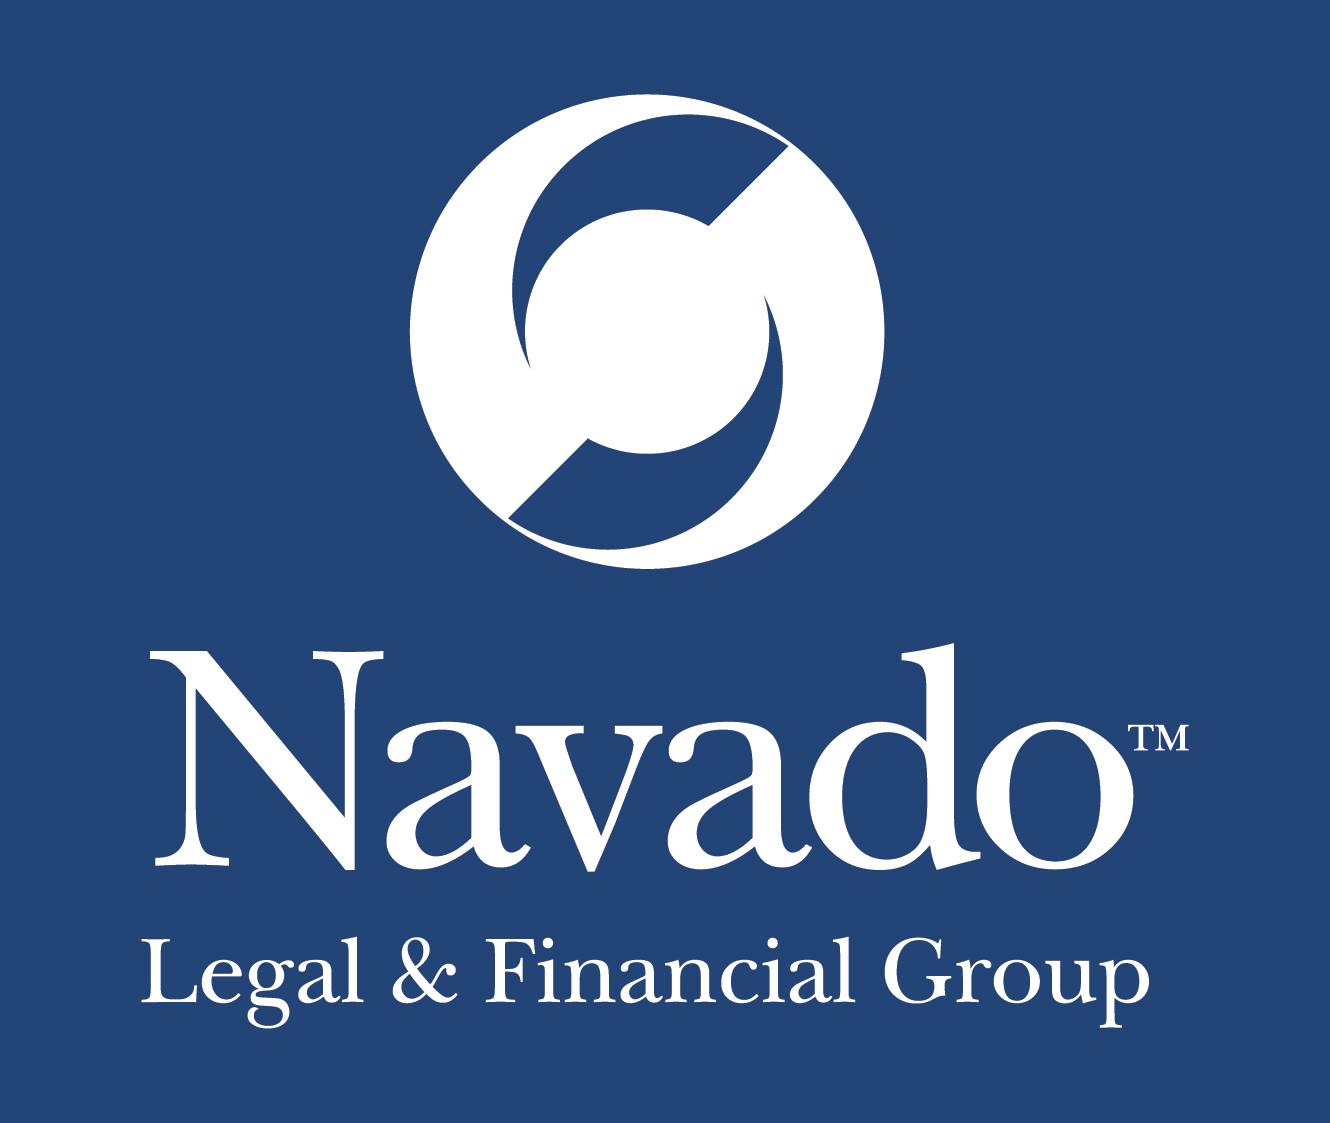 Company logo of Navado